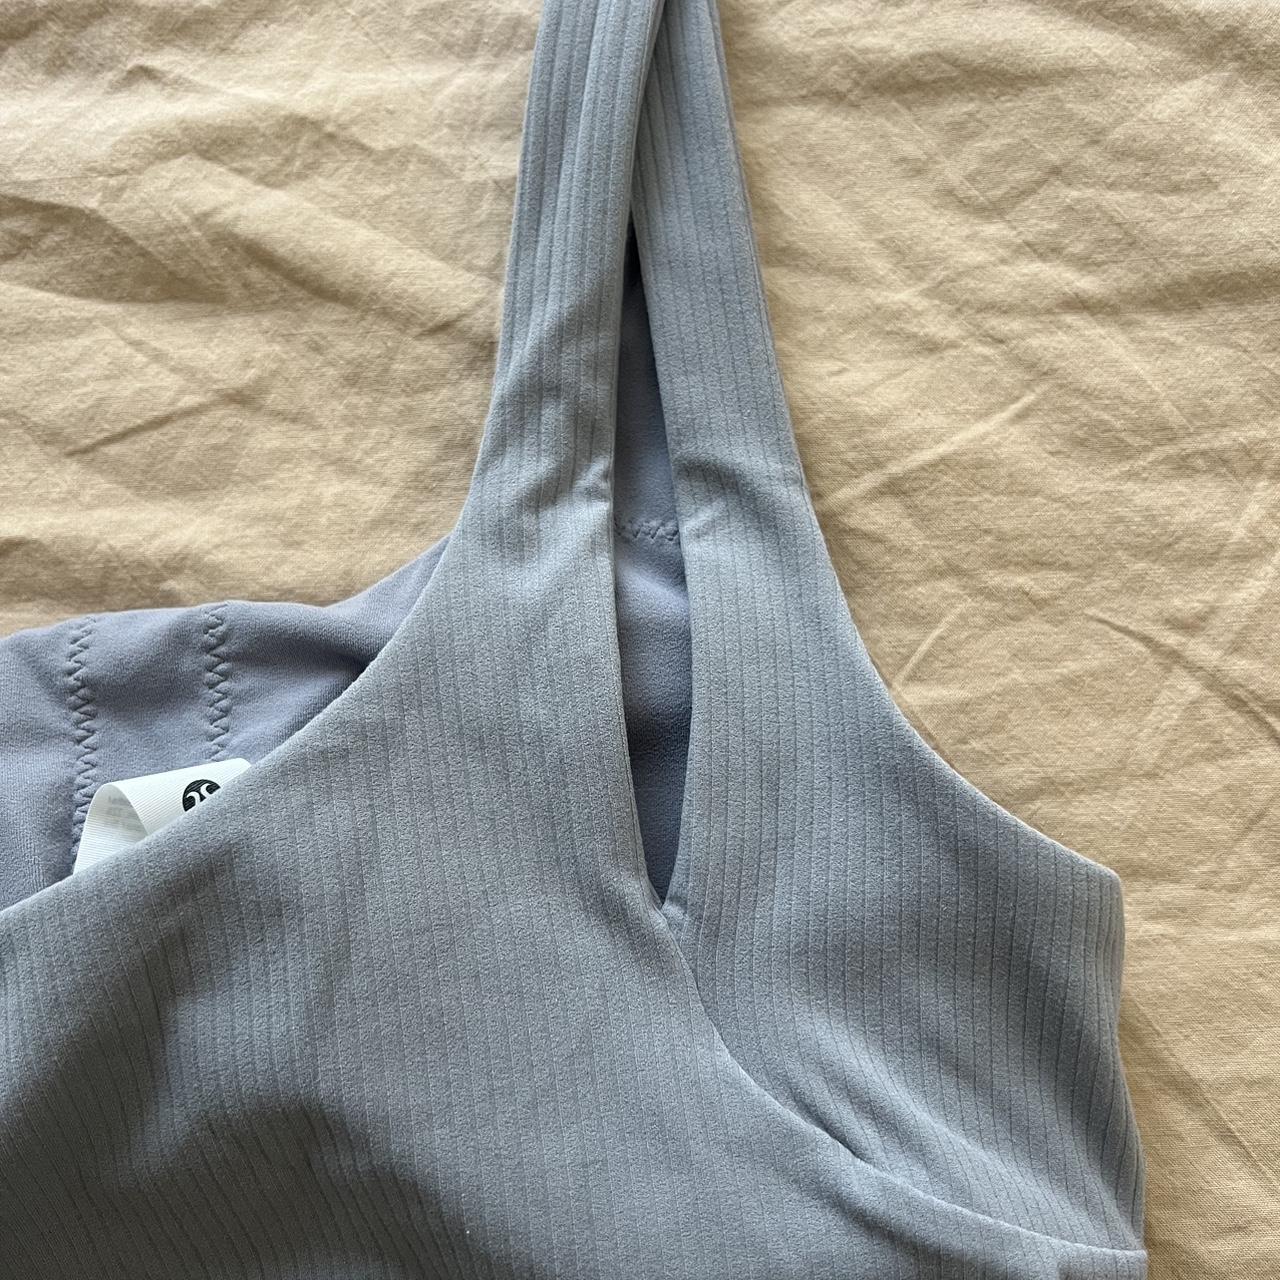 Lululemon Modal-Silk Yoga Tank Top in Silver Grey in - Depop